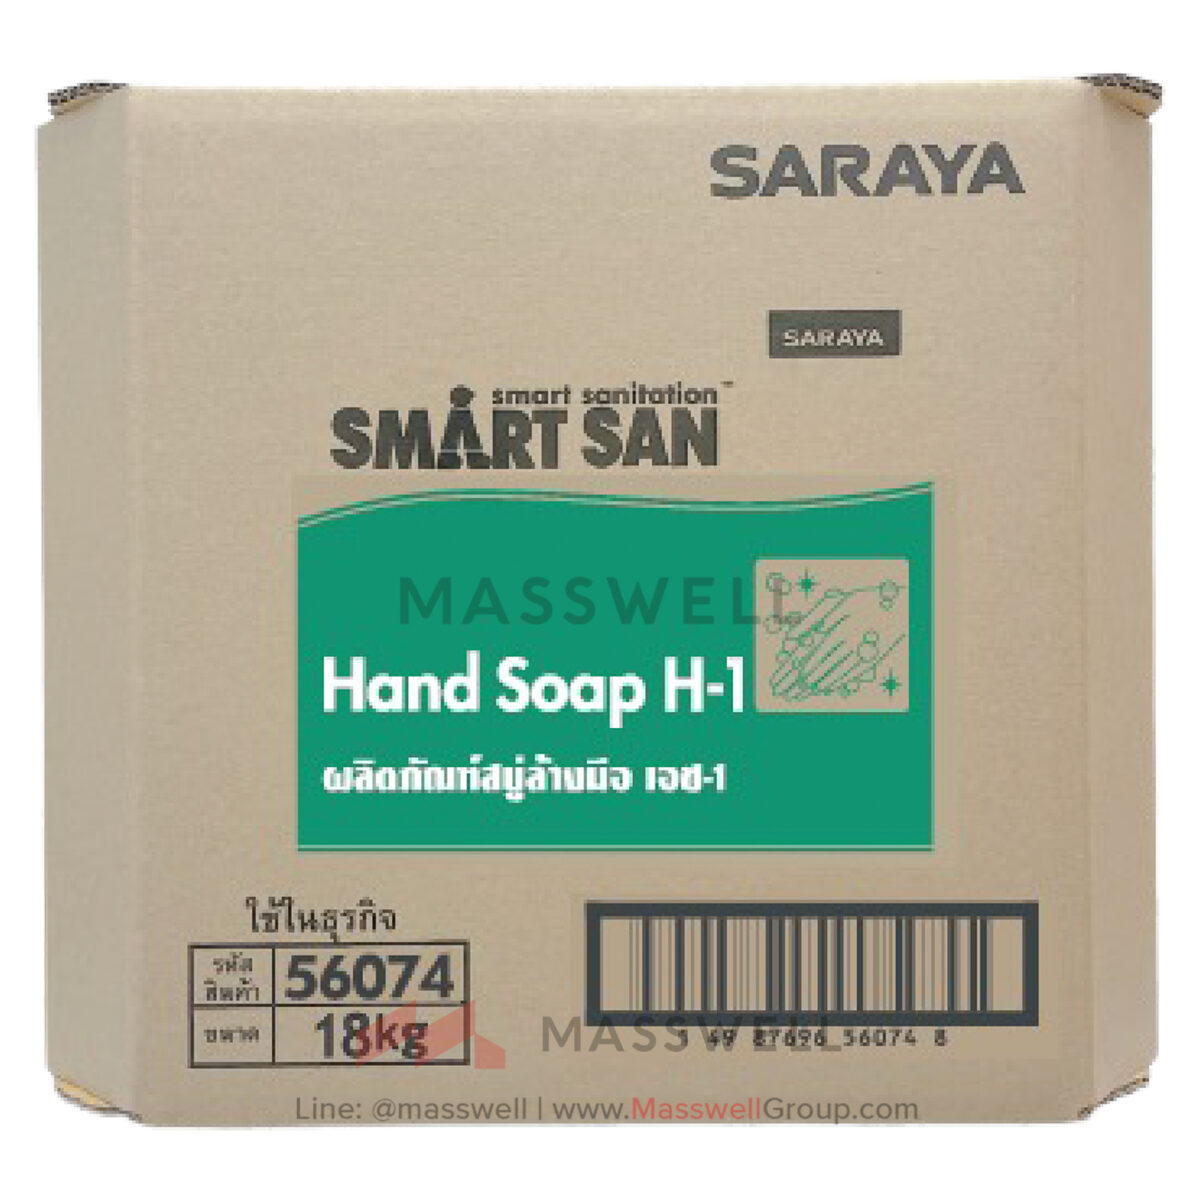 56074 SARAYA สบู่โฟมล้างมือขจัดแบคทีเรีย H-1 ไร้กลิ่น 20 Kg. BIB ถุงเติมในลังขนาดใหญ่ คุ้มค่า